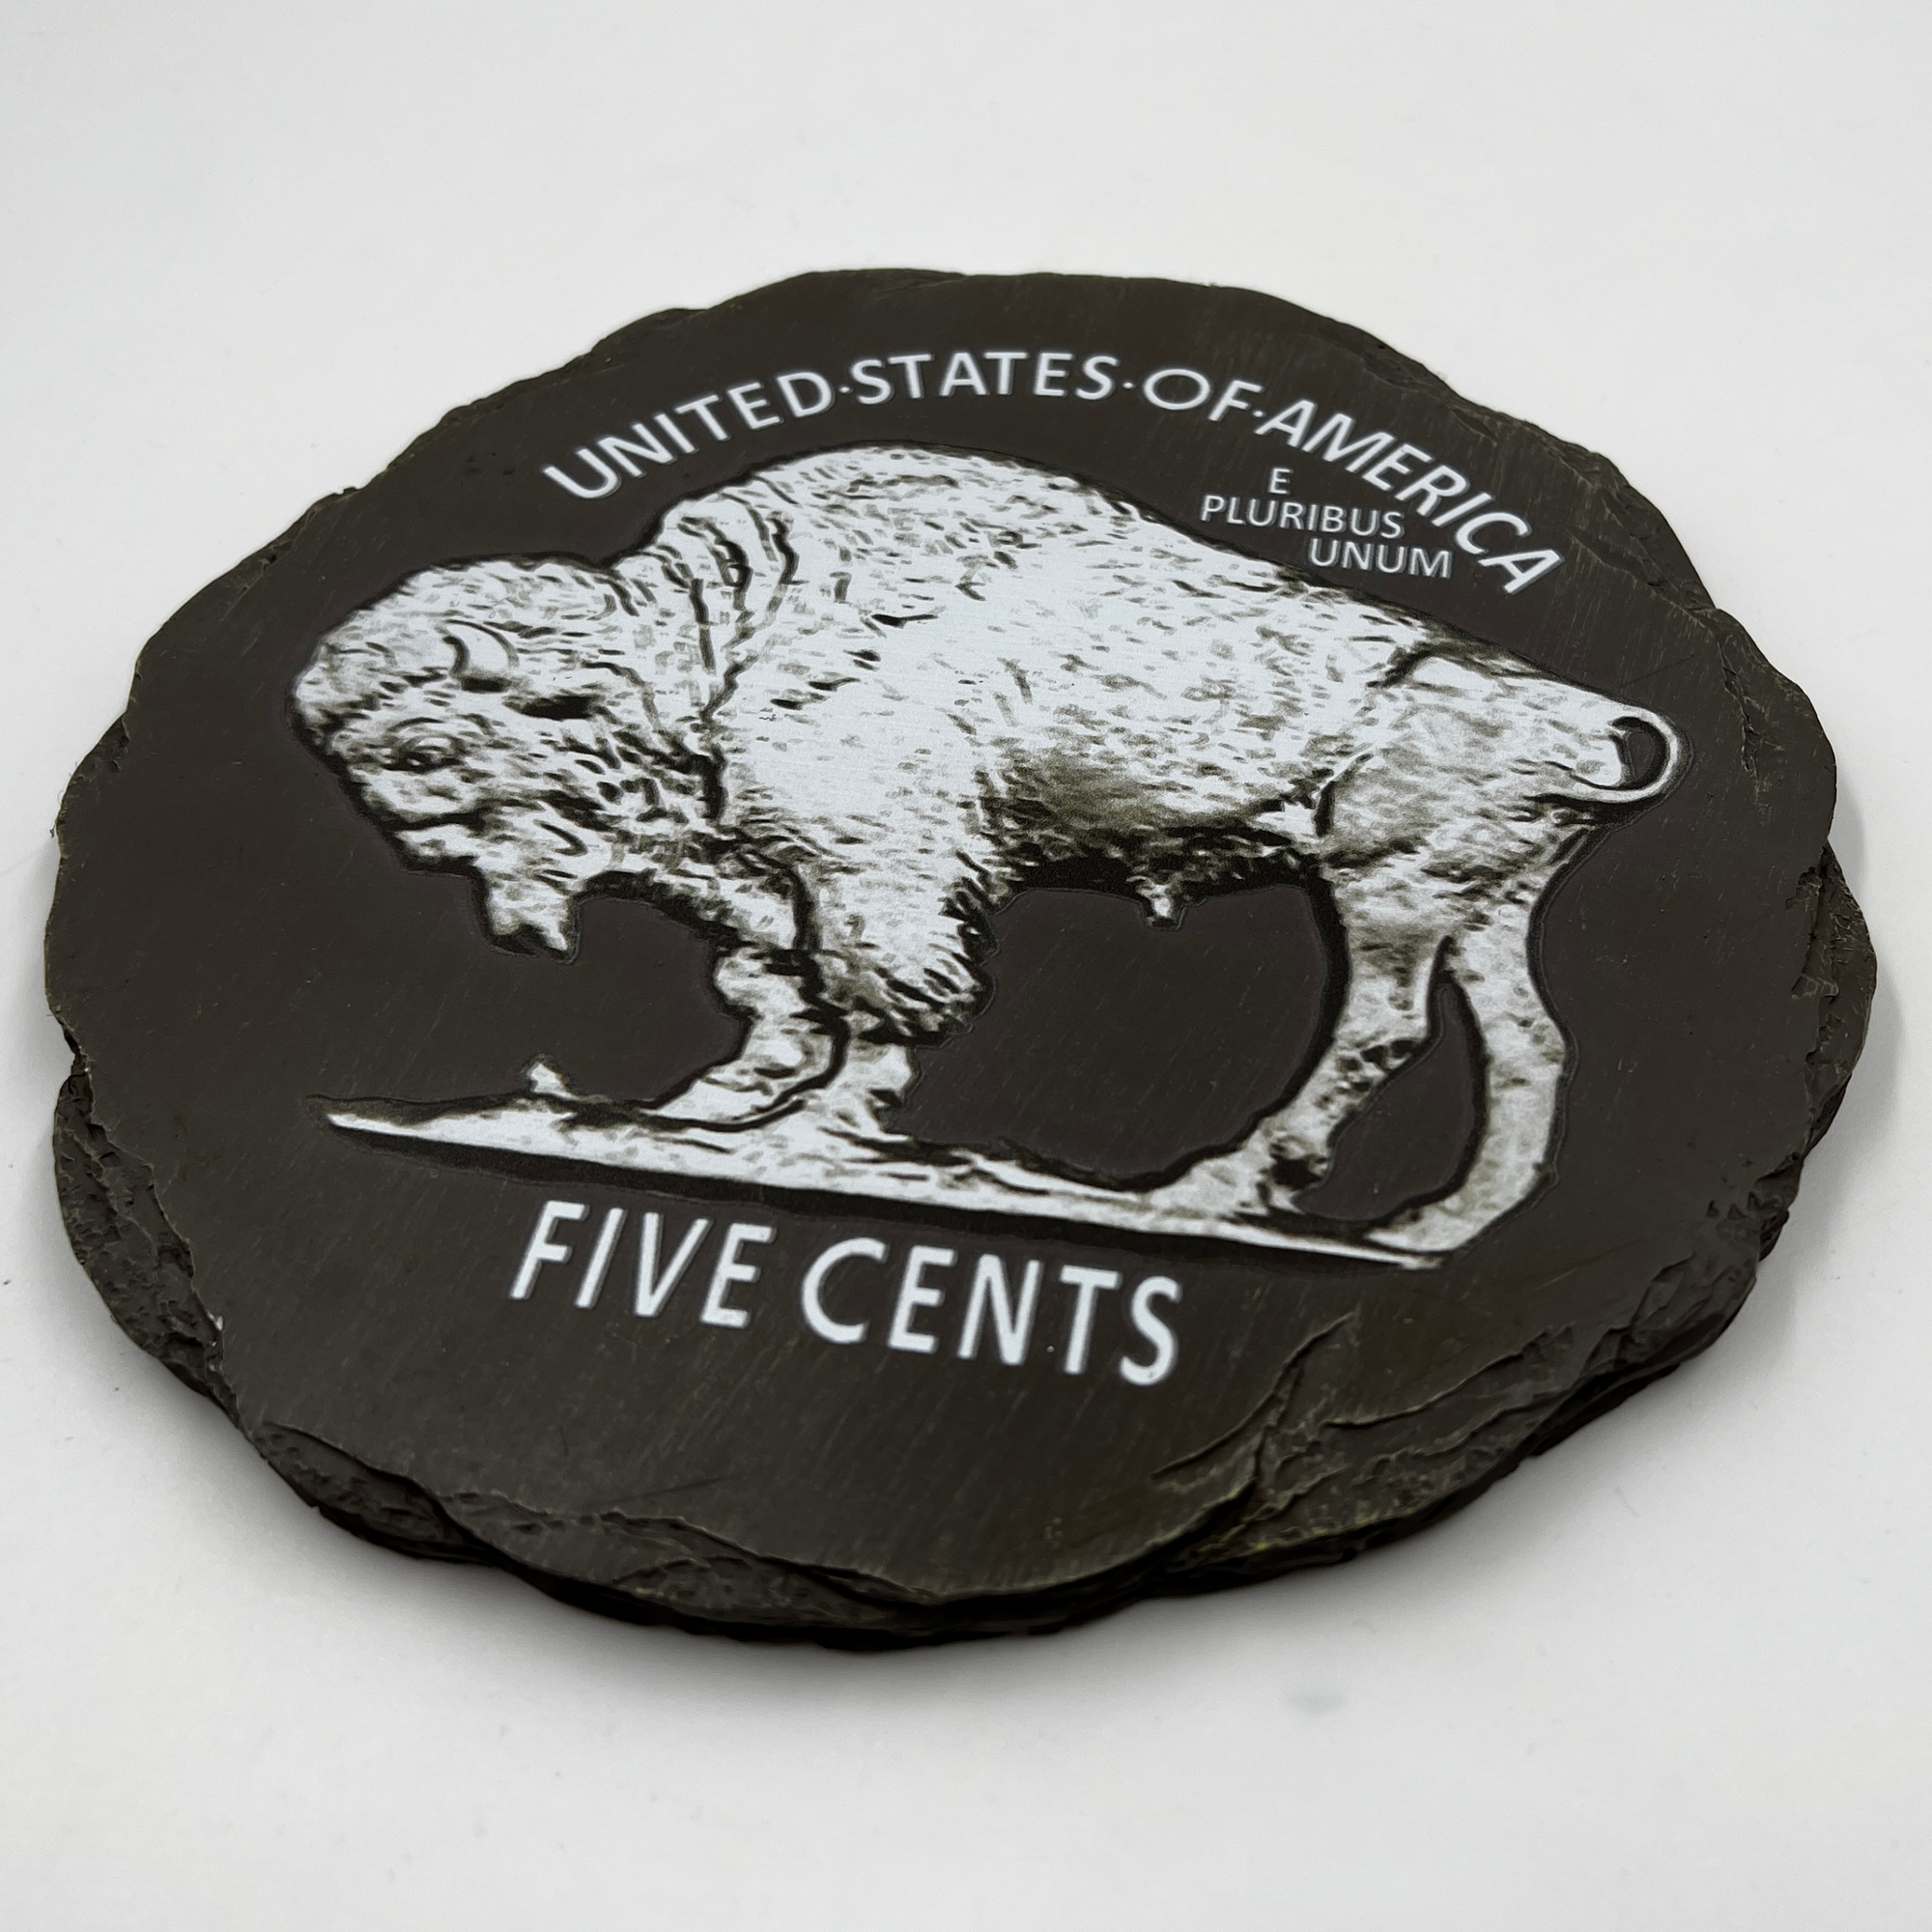 USA Five Cents Resin Garden Stone